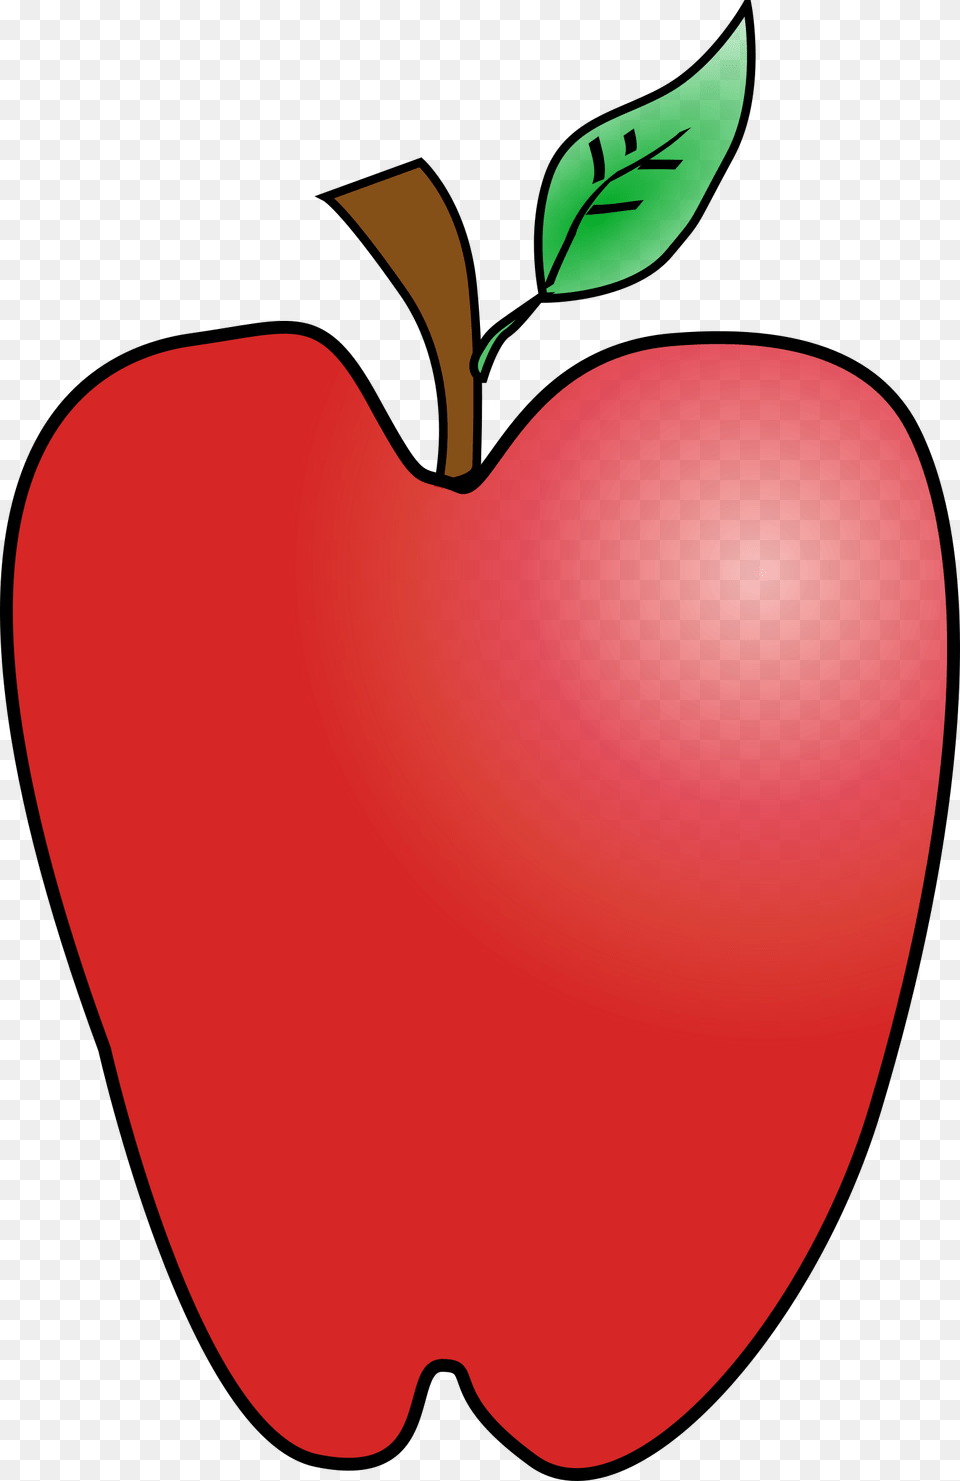 Apples Border Background Transparent Apple Cartoon No Background, Food, Fruit, Plant, Produce Free Png Download